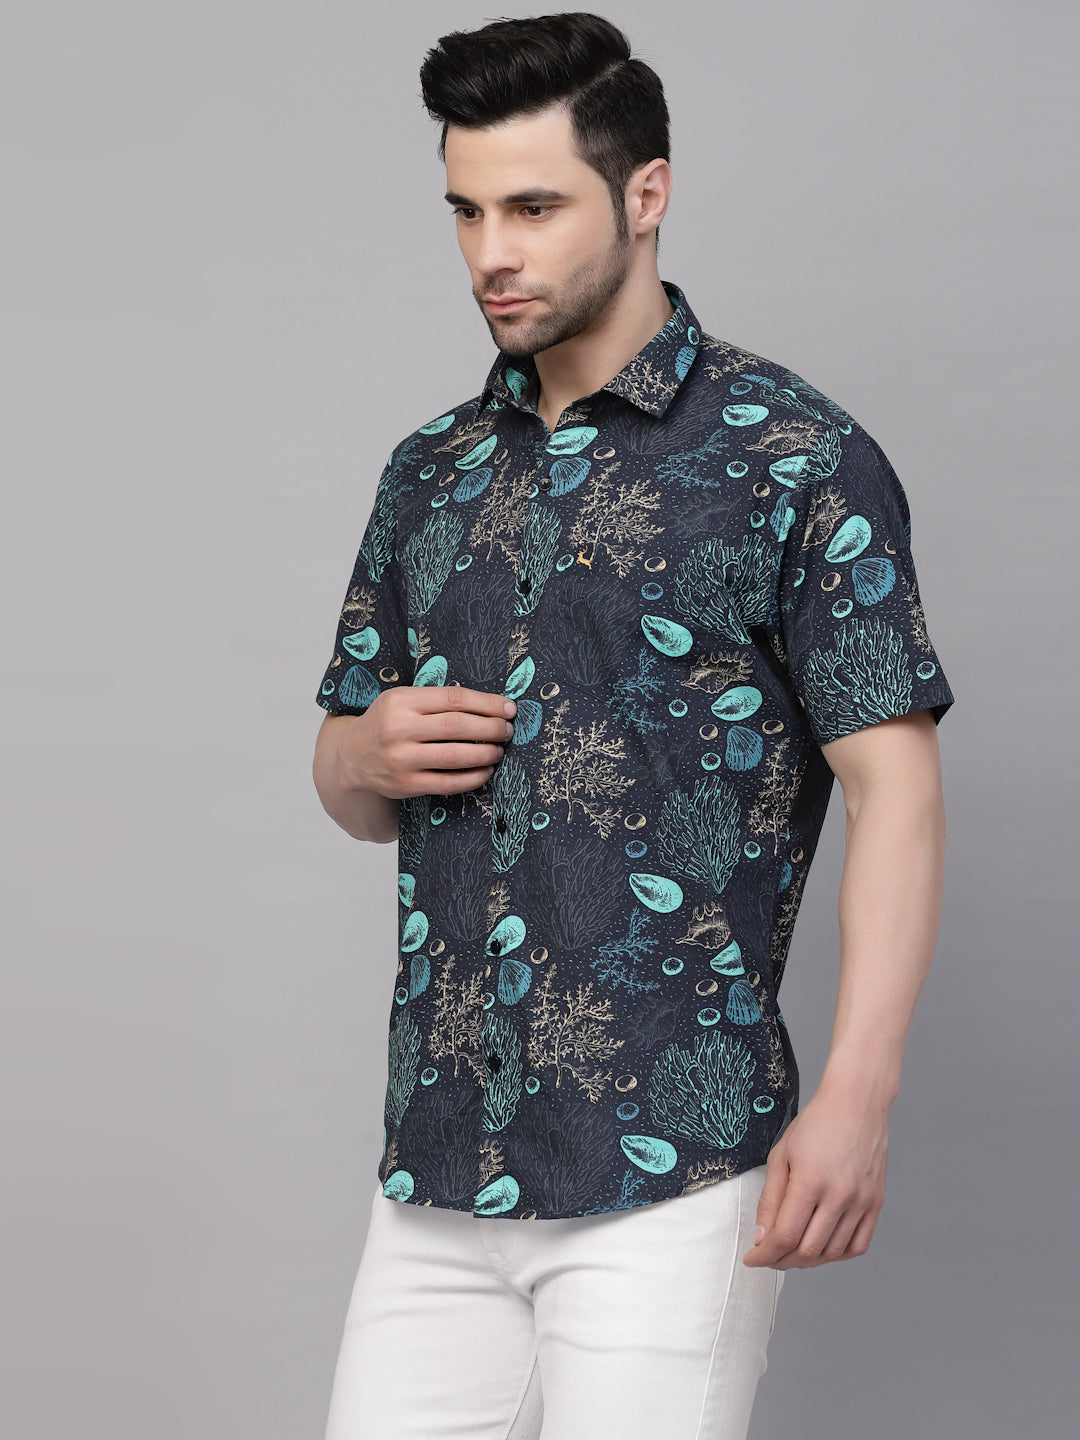 Valbone Men’s Blue & Black Digital Sea Plant Printed Regular Fit Casual Shirt Half Sleeves